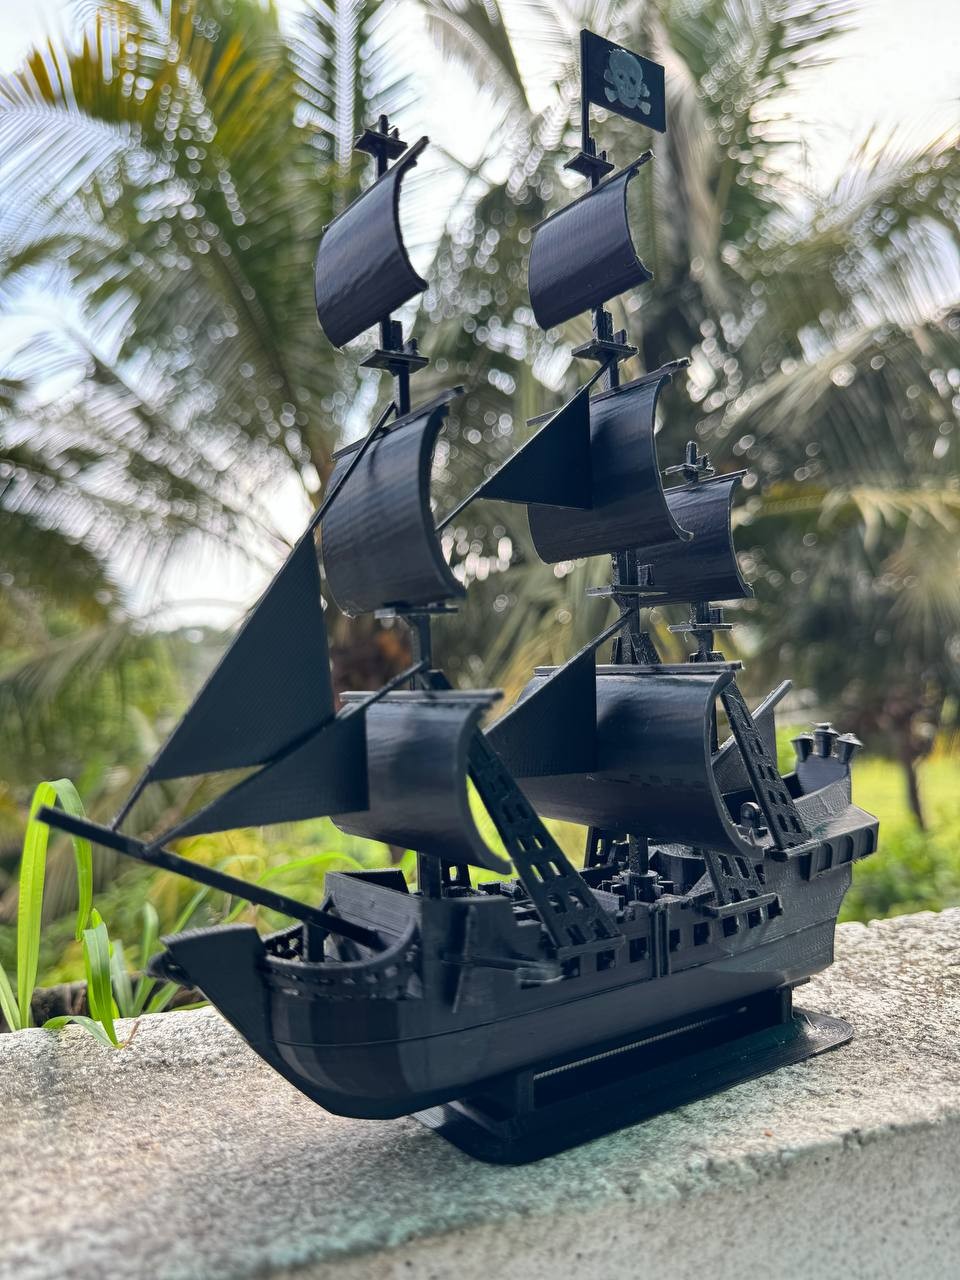 The Black Pearl 3D Ship